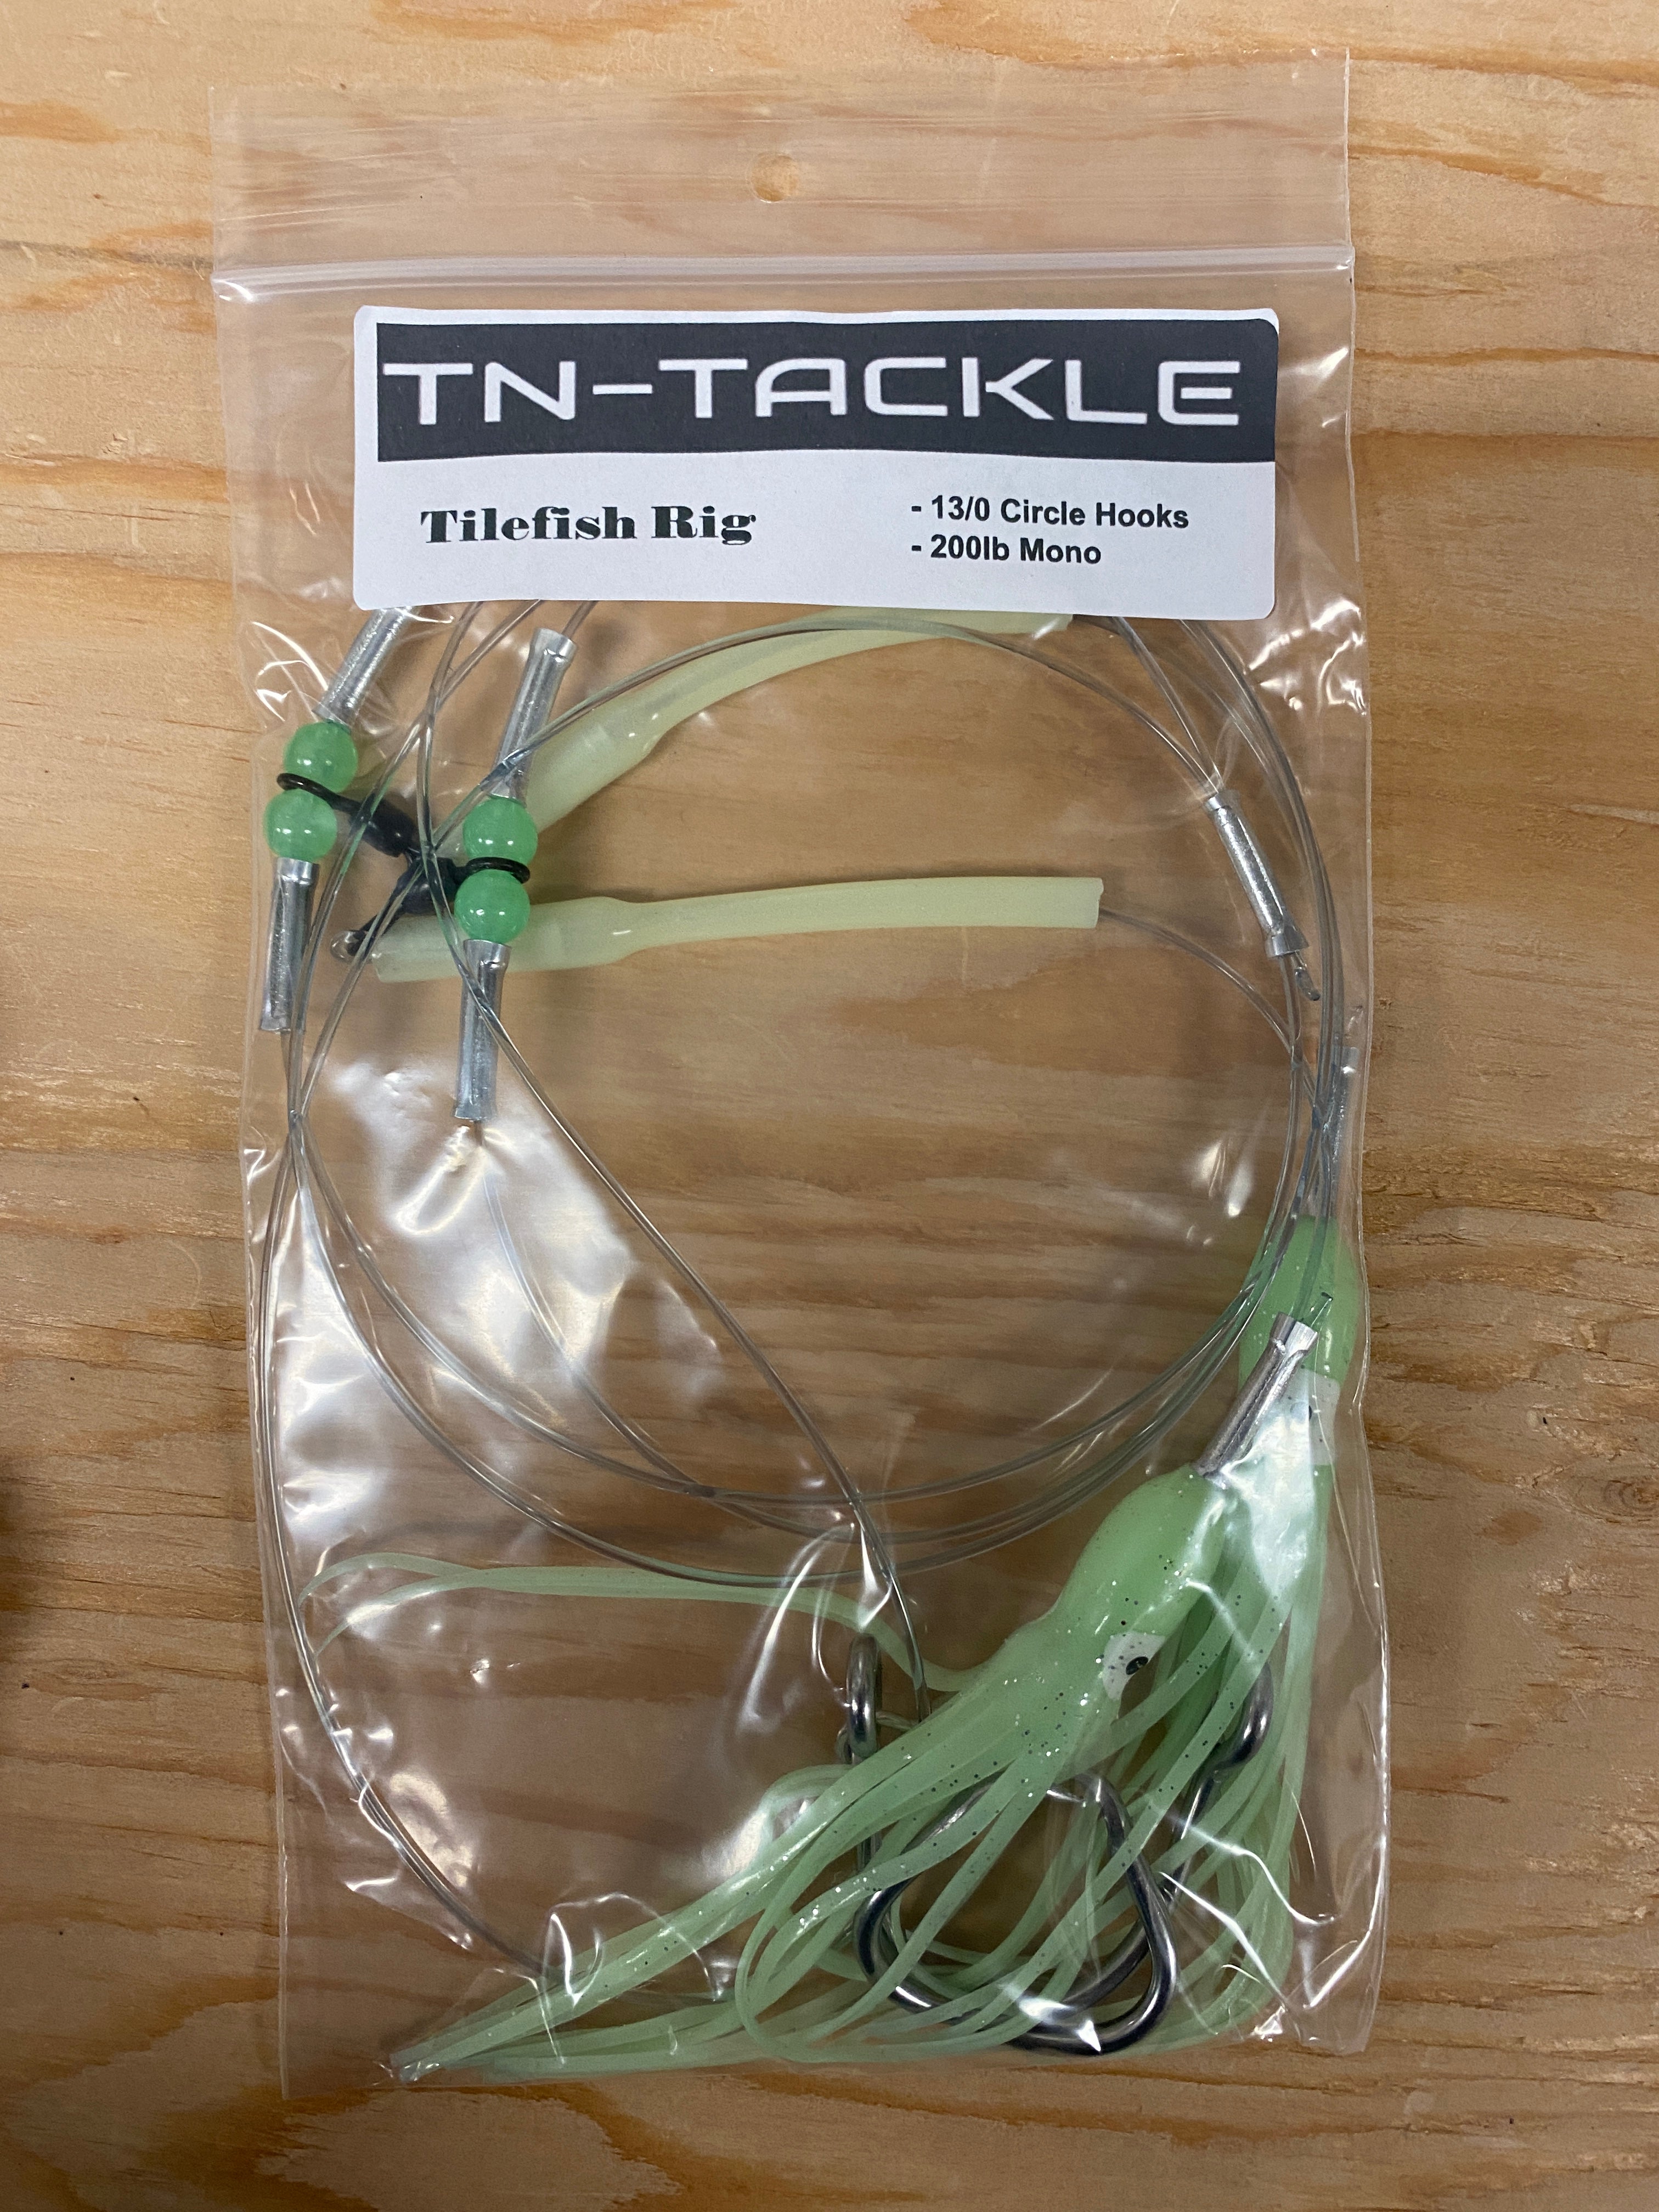 TN-Tackle - Tilefish Rigs